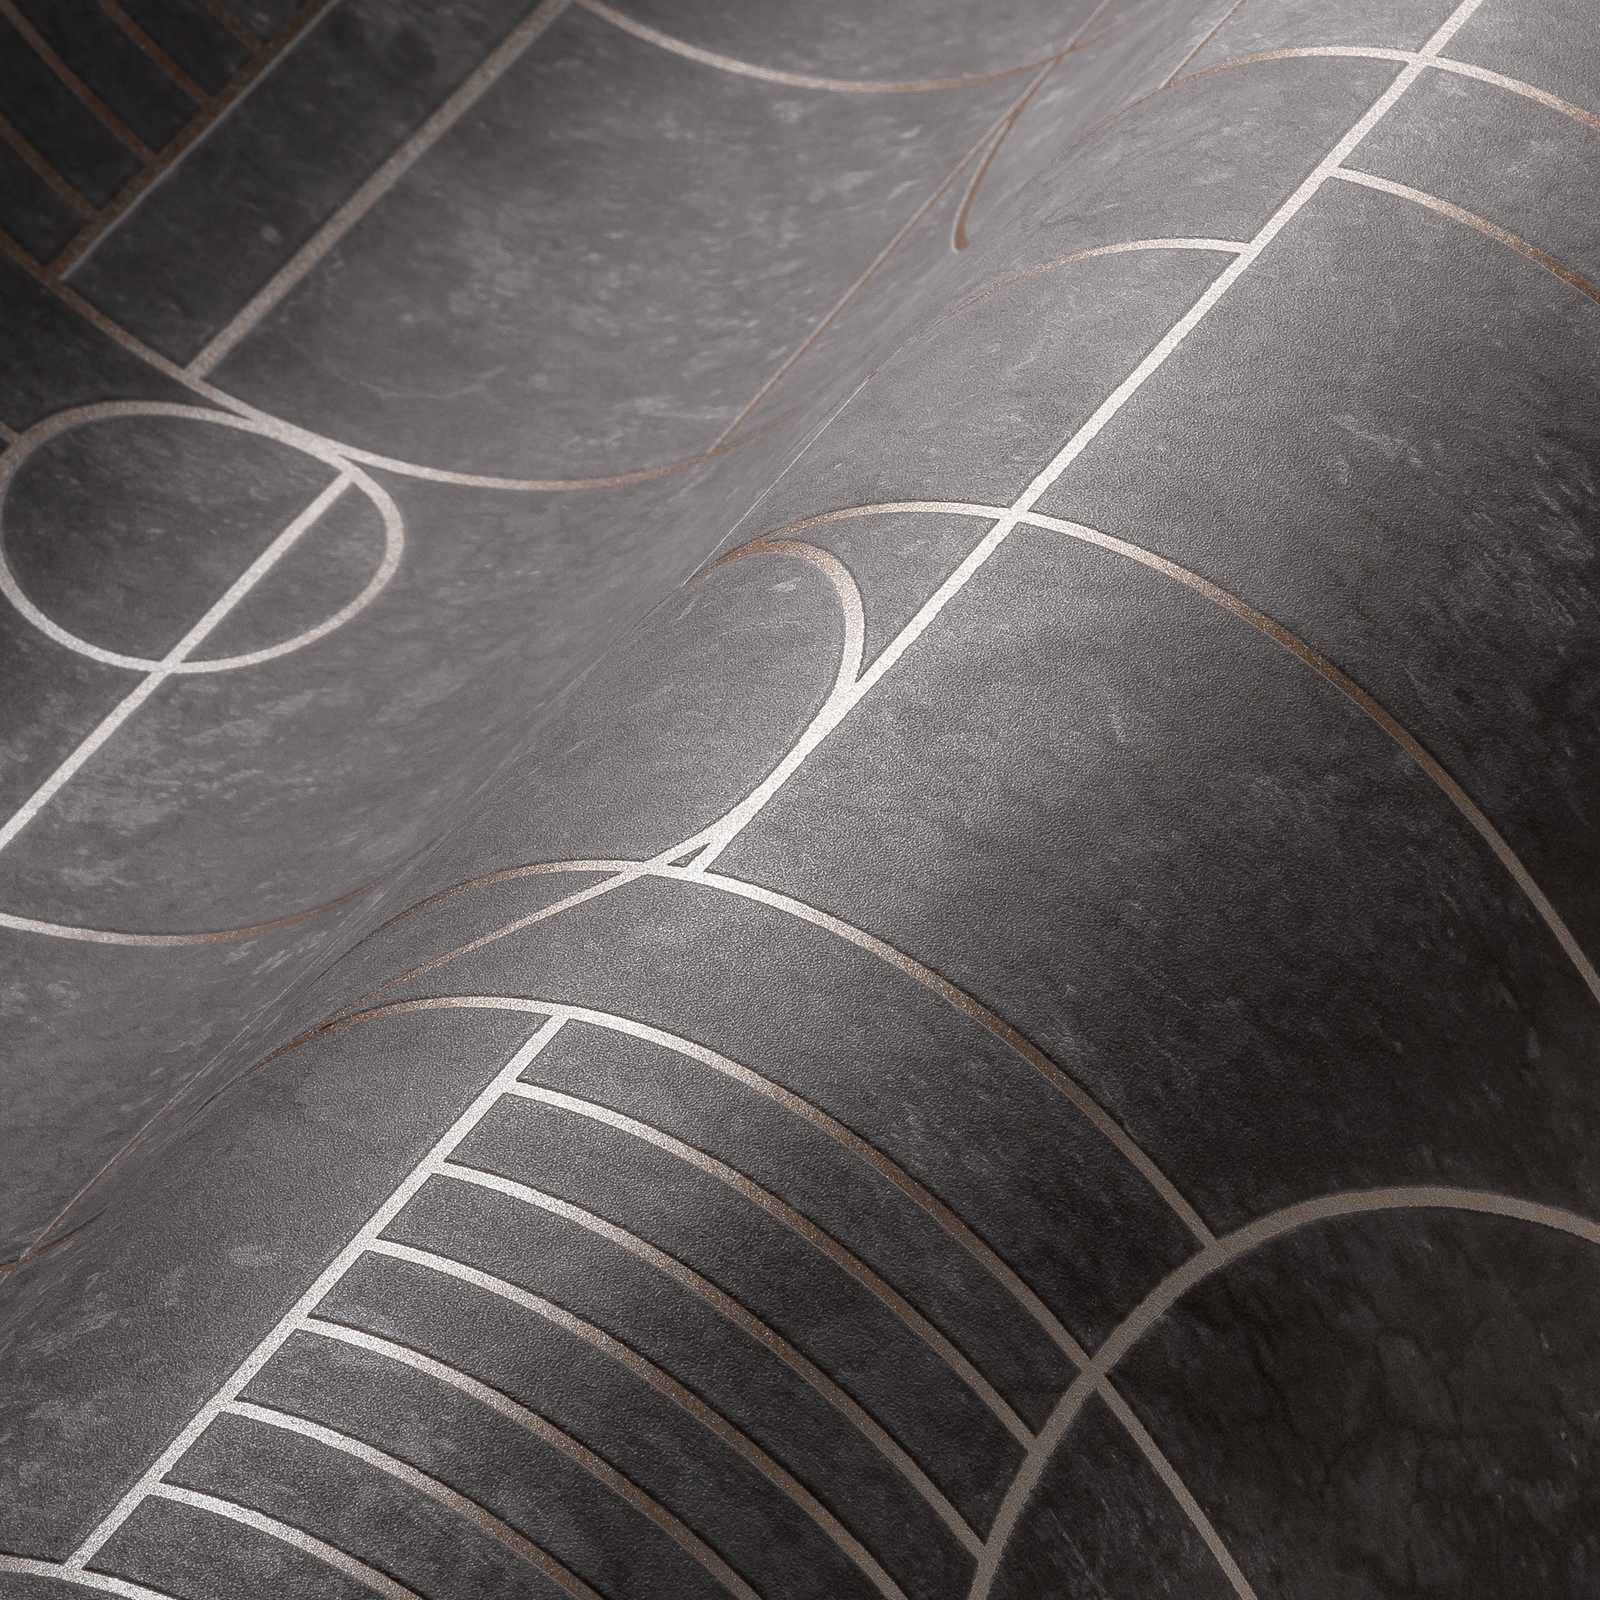             Fliesenoptik Tapete Art Deco Design marmoriert – Grau, Metallic
        